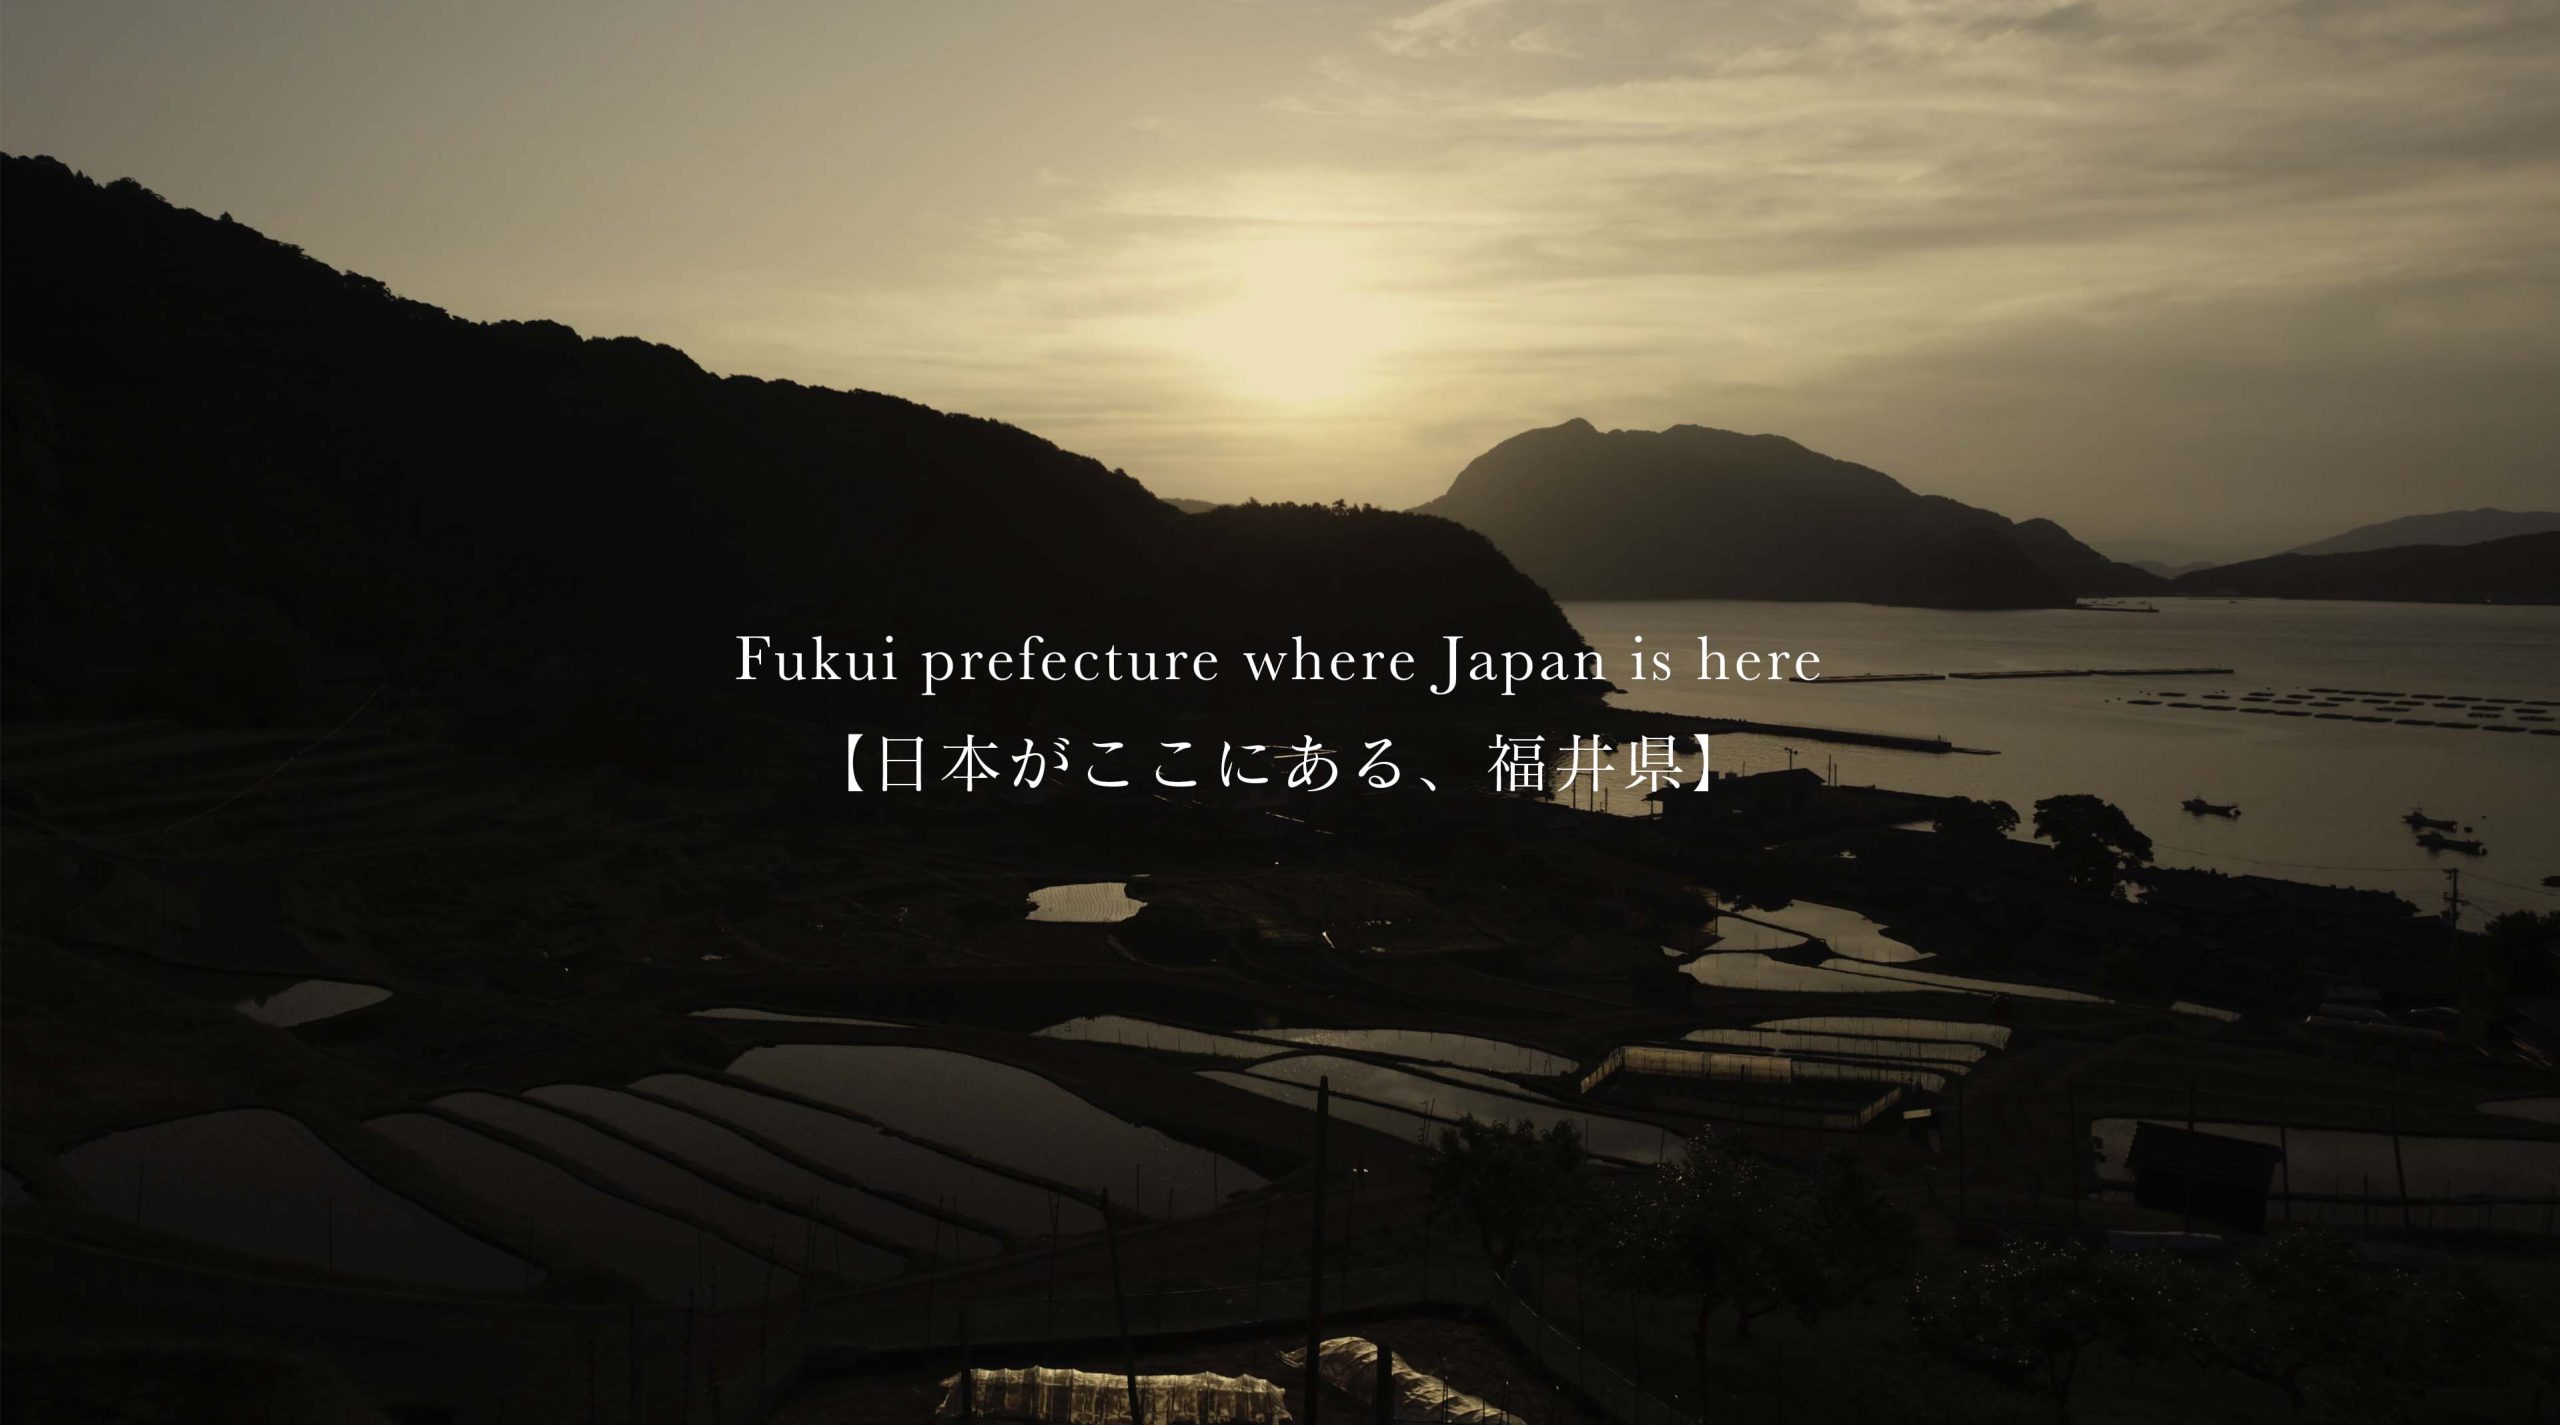 Fukui prefecture where Japan is here【日本がここにある、福井県】